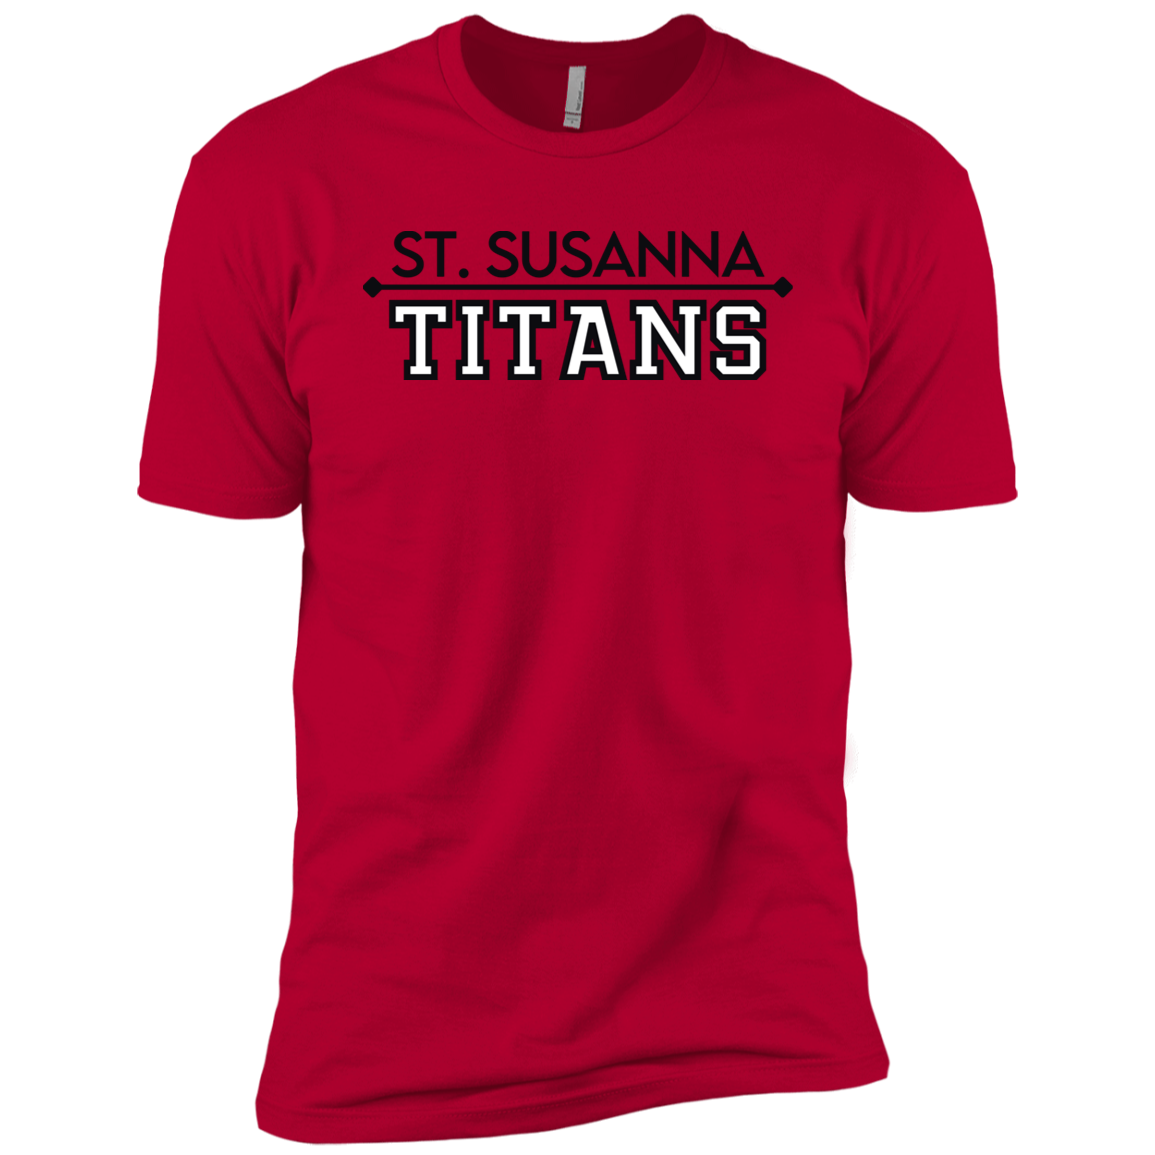 St. Susanna Titans (black/white) Youth Cotton T-Shirt